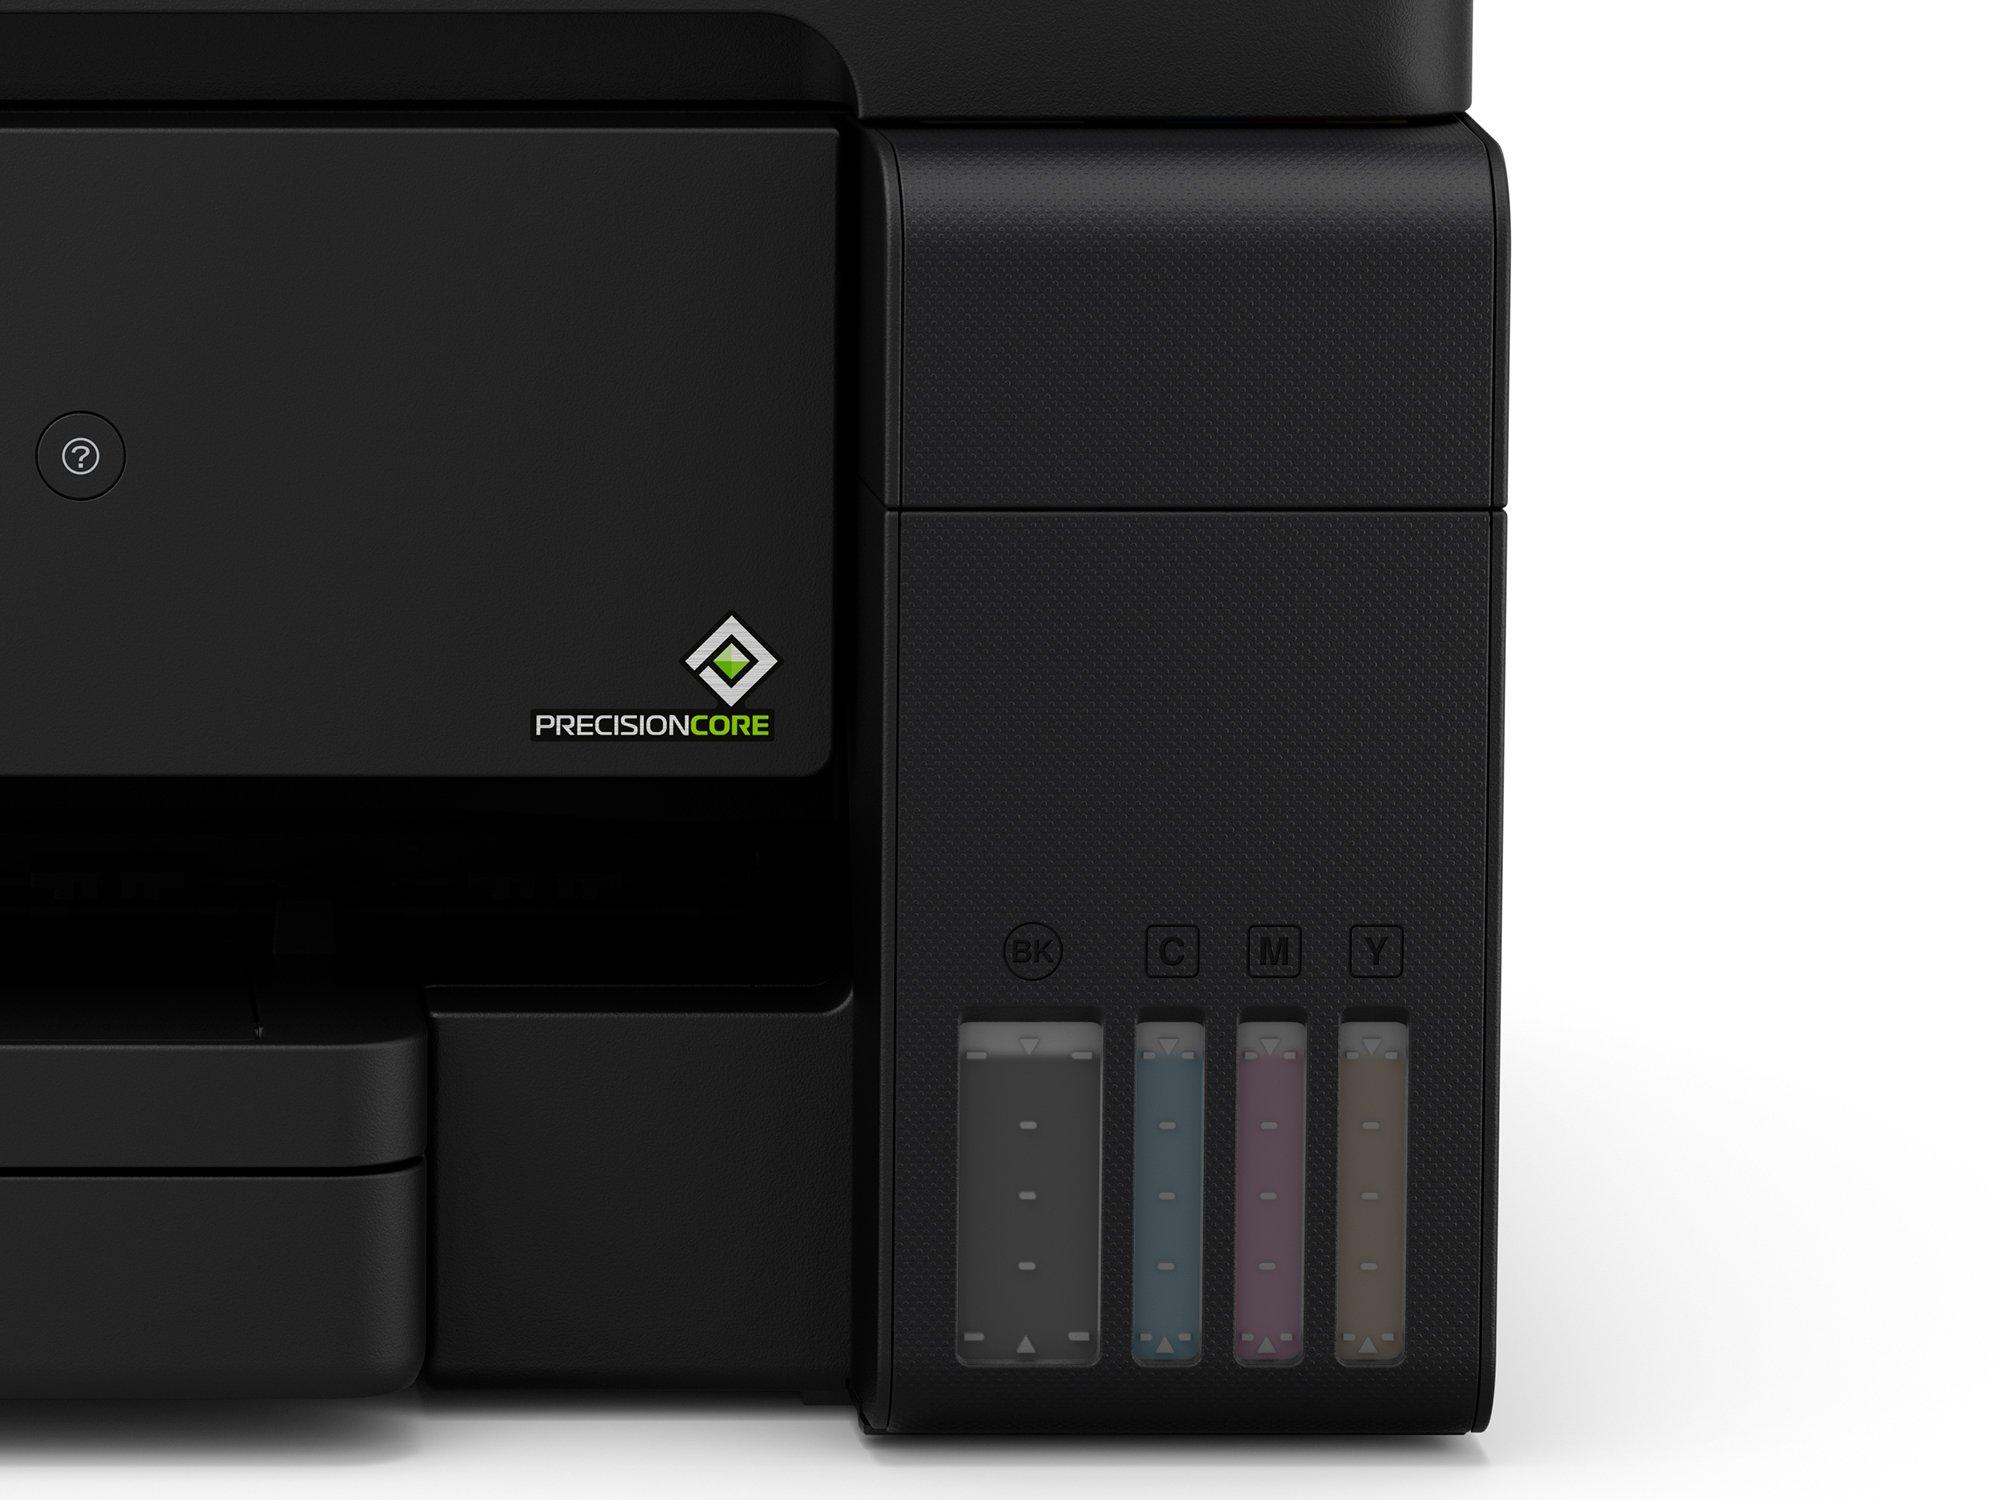 EcoTank L14150, Consumer, Inkjet Printers, Printers, Products